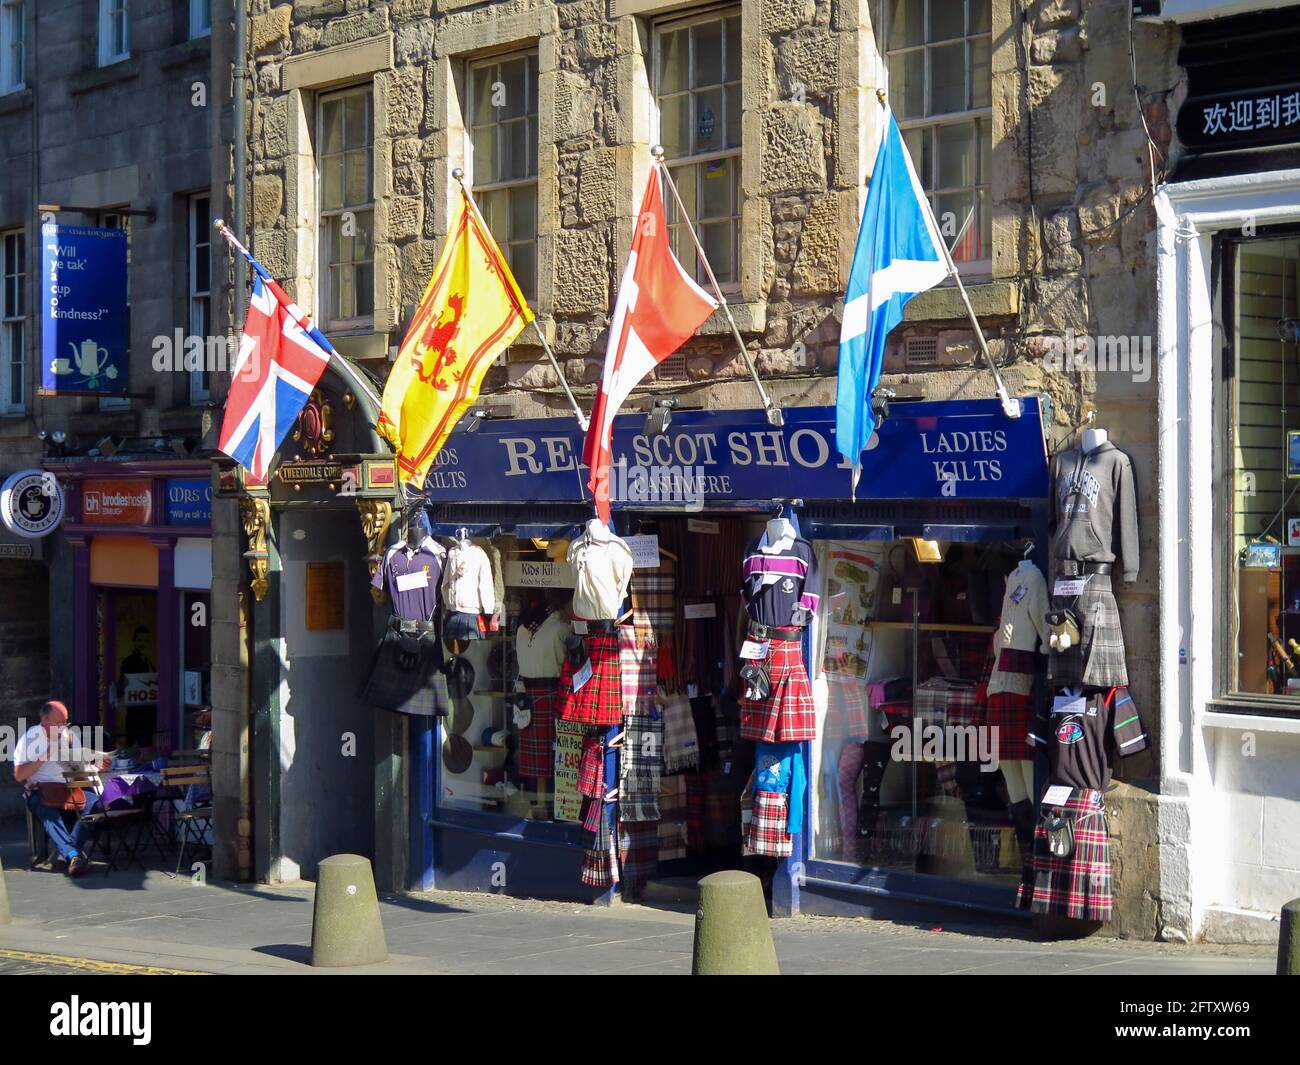 Real Scot Shop Scottish gift shop on Royal Mile Edinburgh Stock Photo